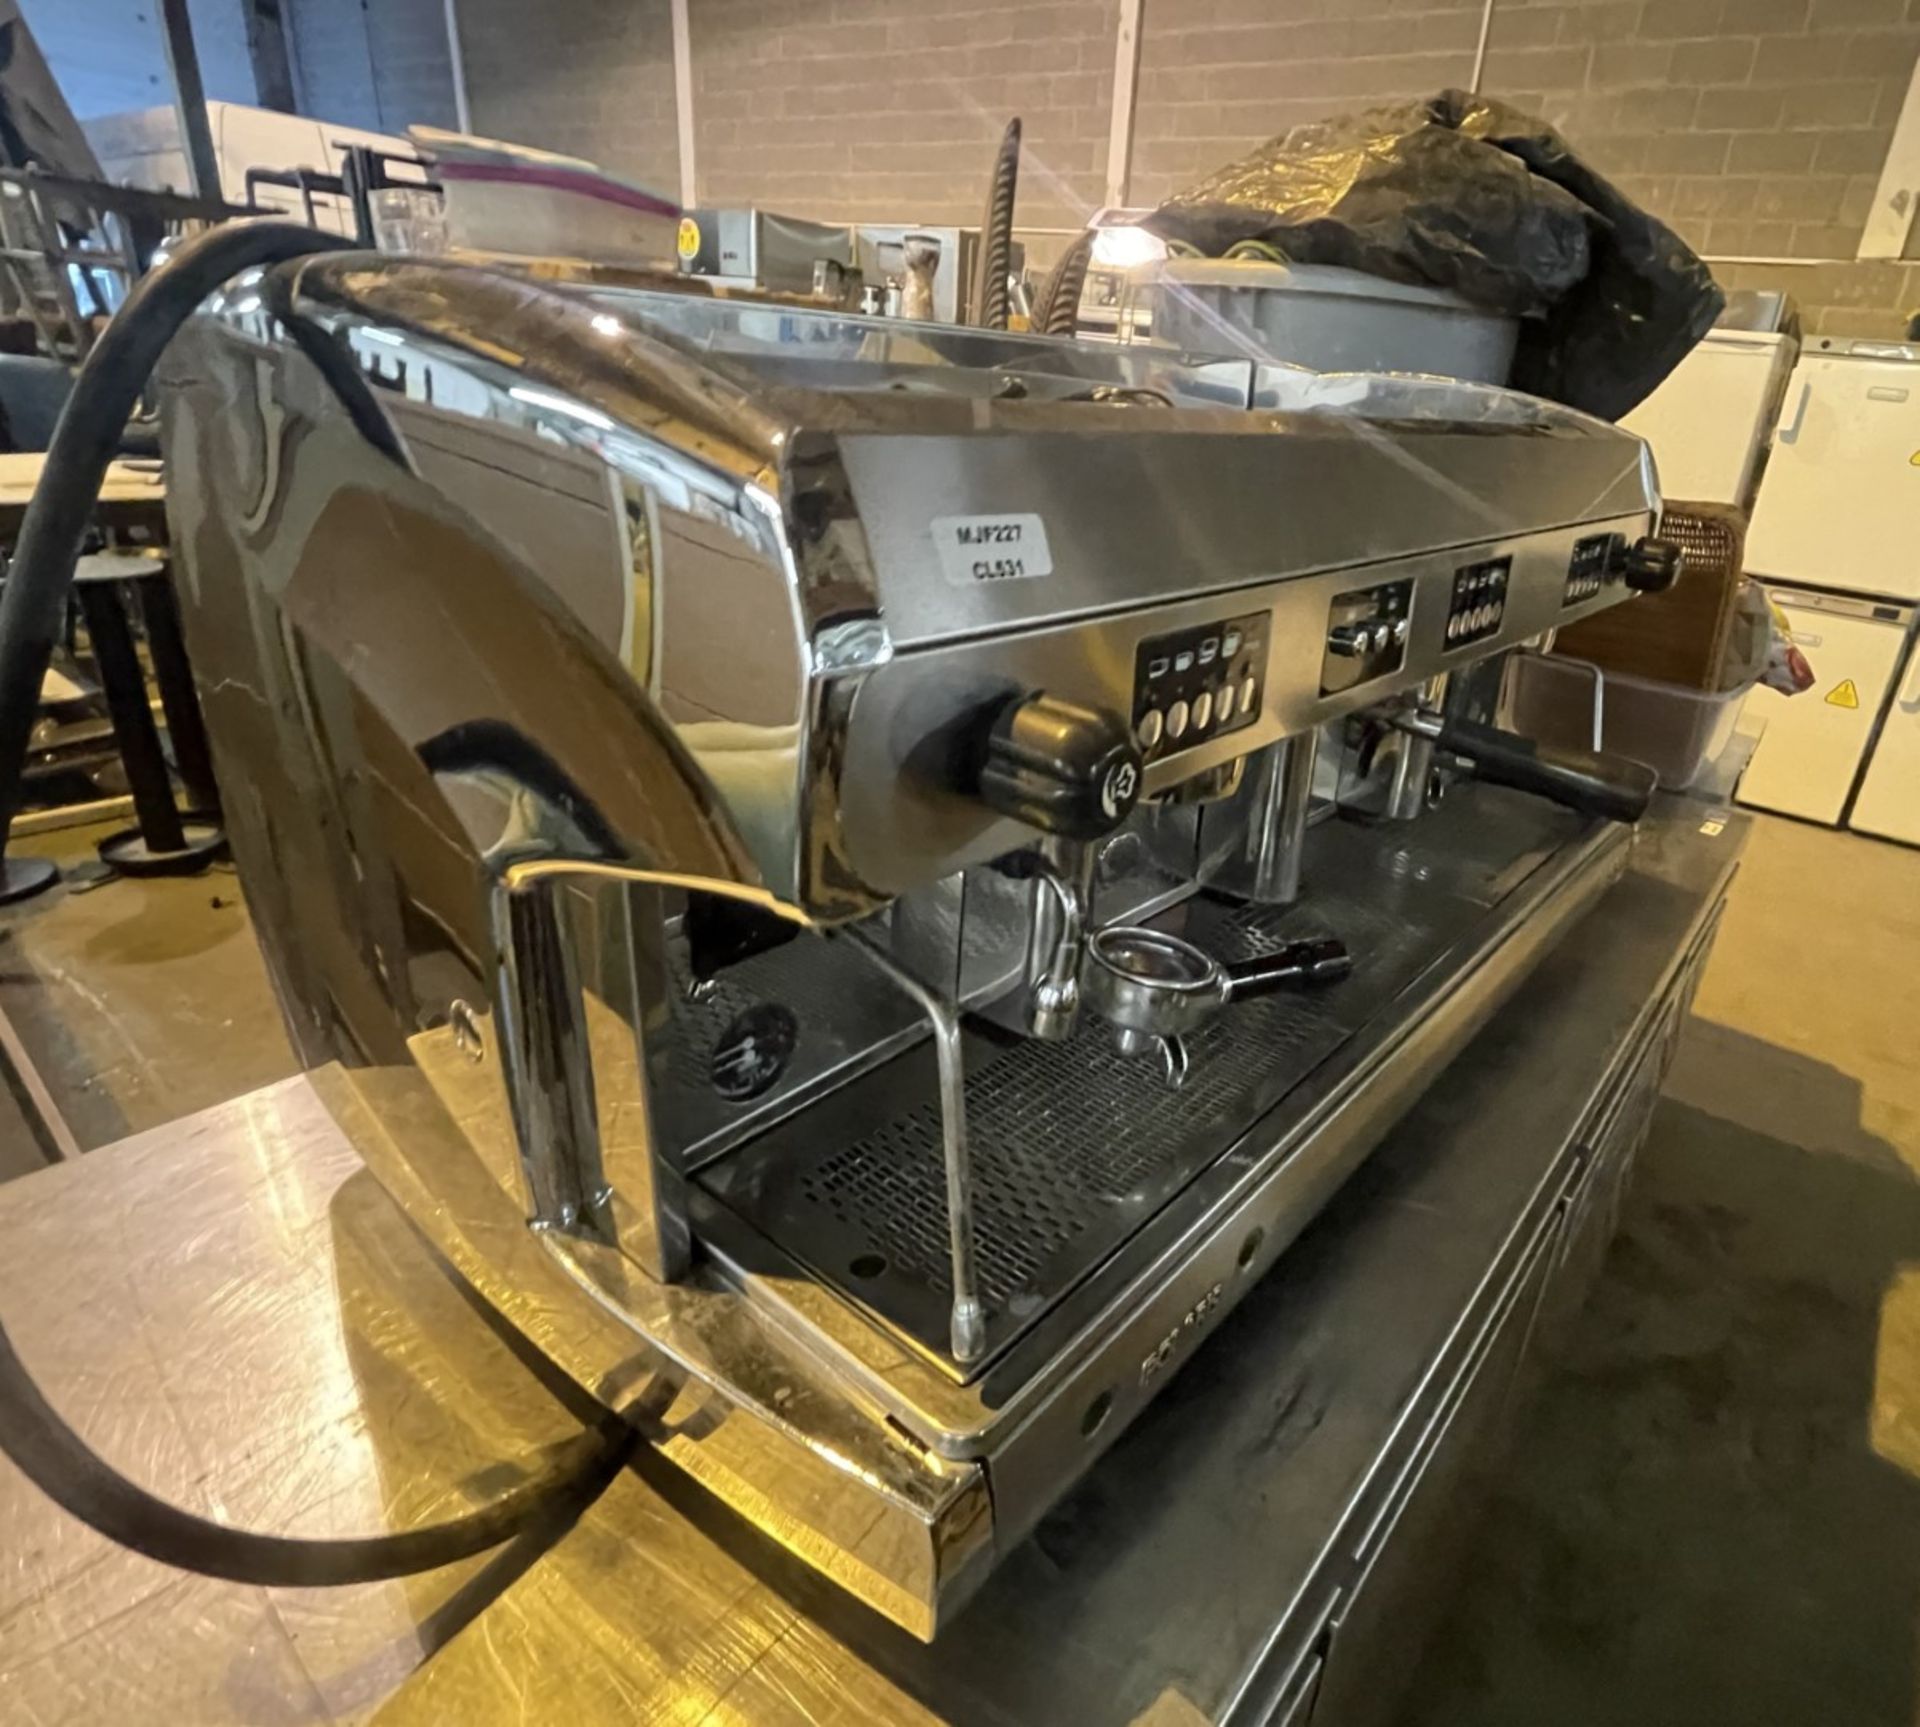 1 x Polaris Wega 3 Group Commercial Espresso Coffee Machine - Stainless Steel Exterior - 3 Phase - Image 5 of 14